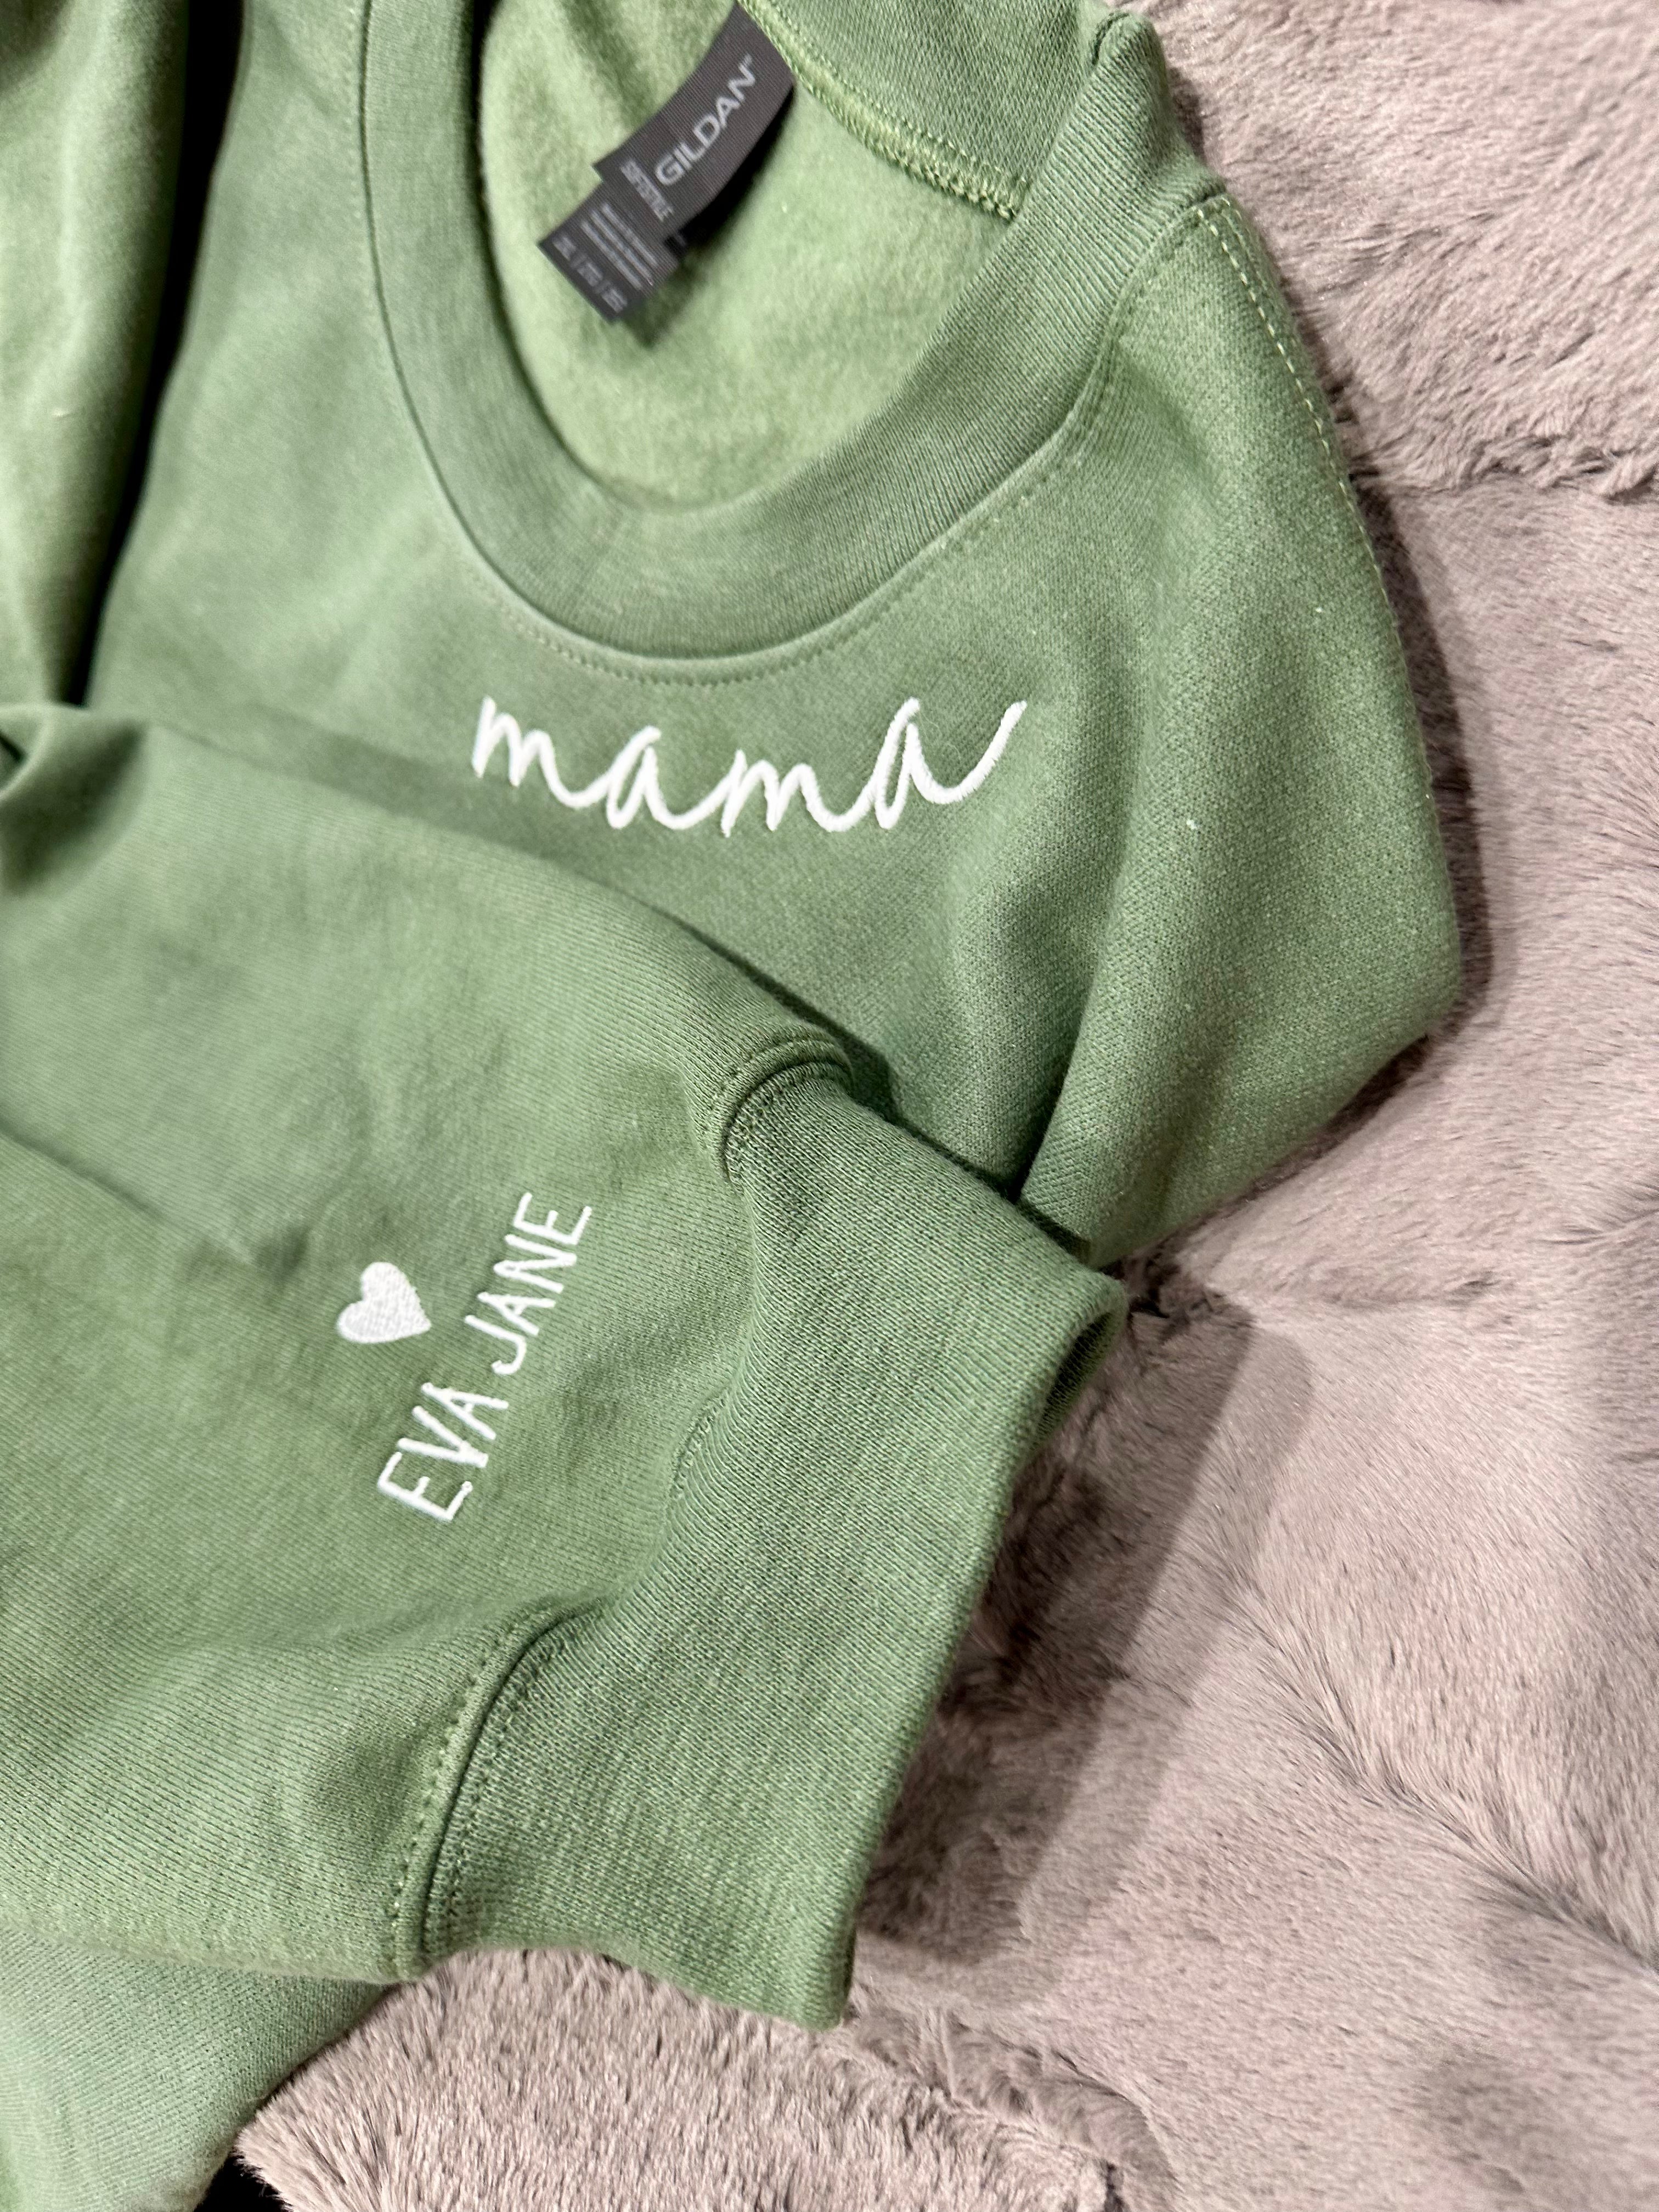 Custom Embroidered Scripty Font “mama” on the neckline Sweatshirts